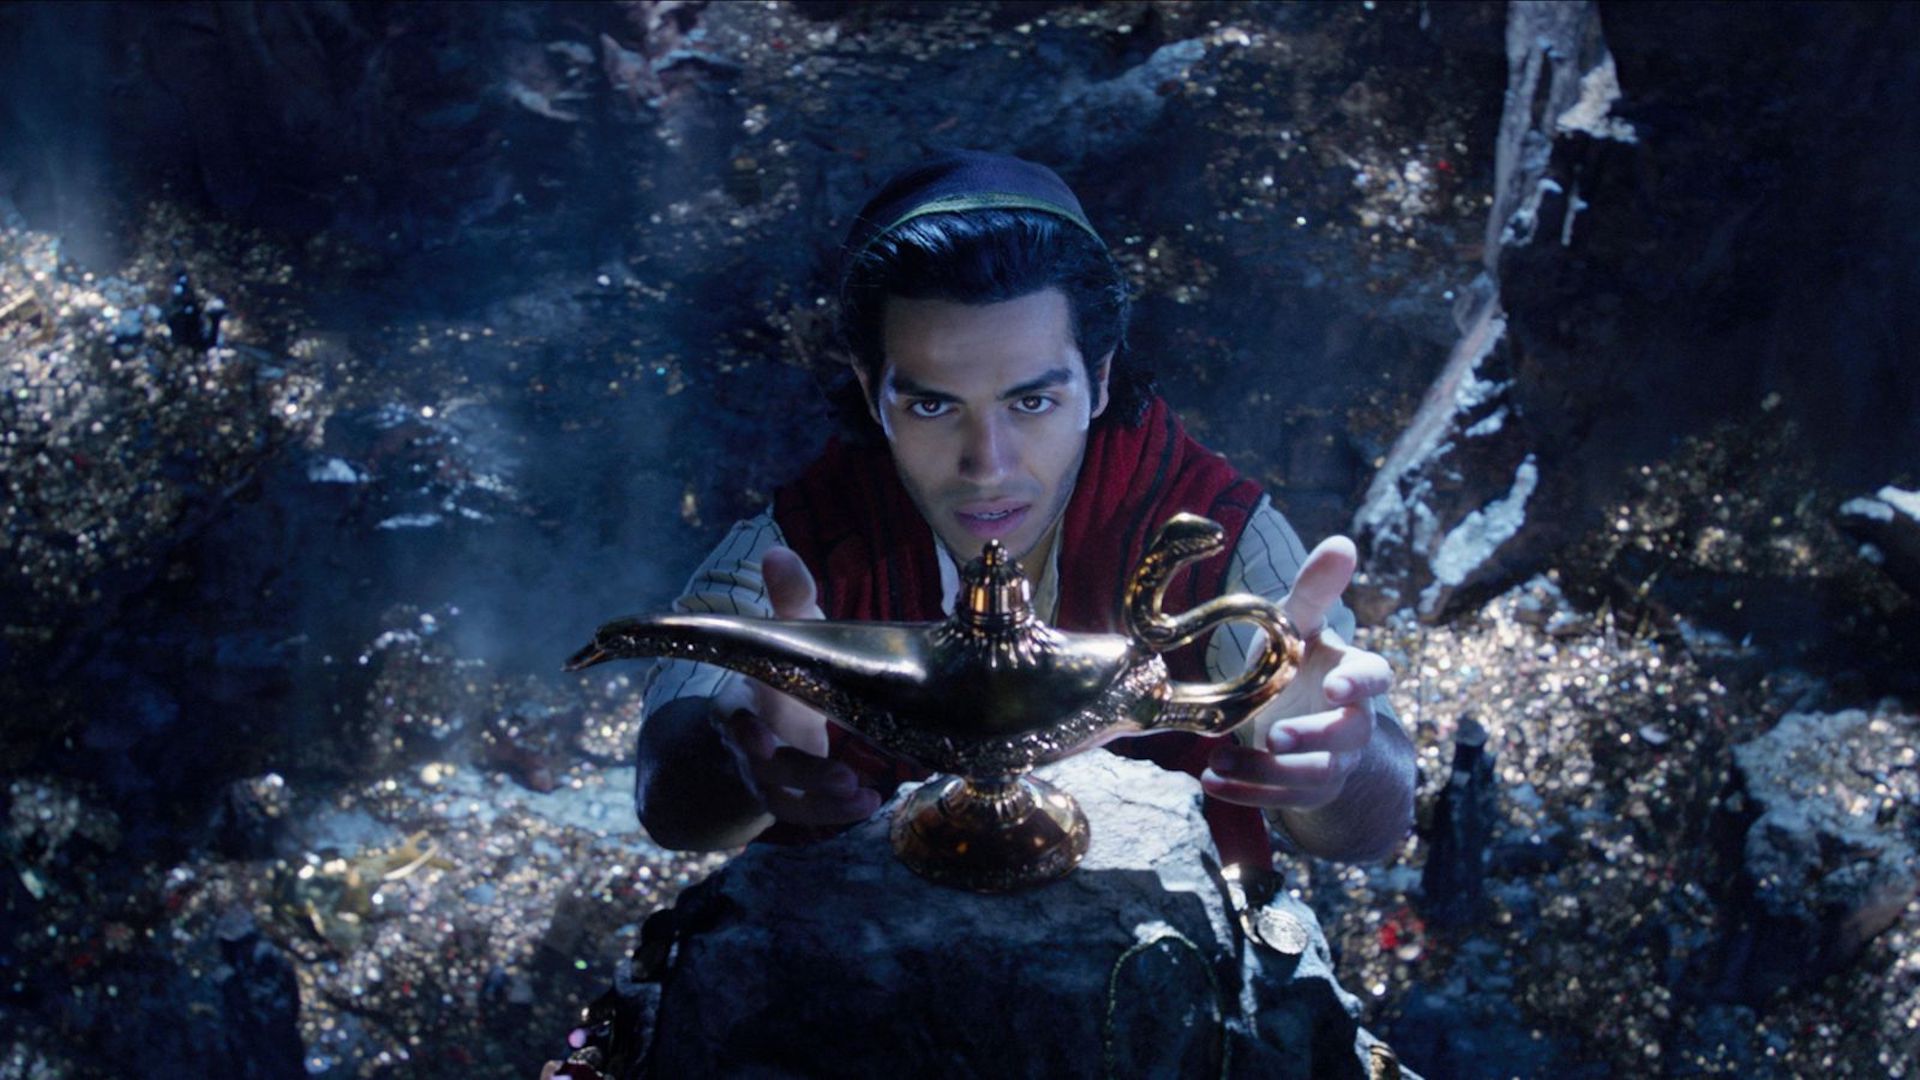 A scene from the 2019 Disney film, Aladdin